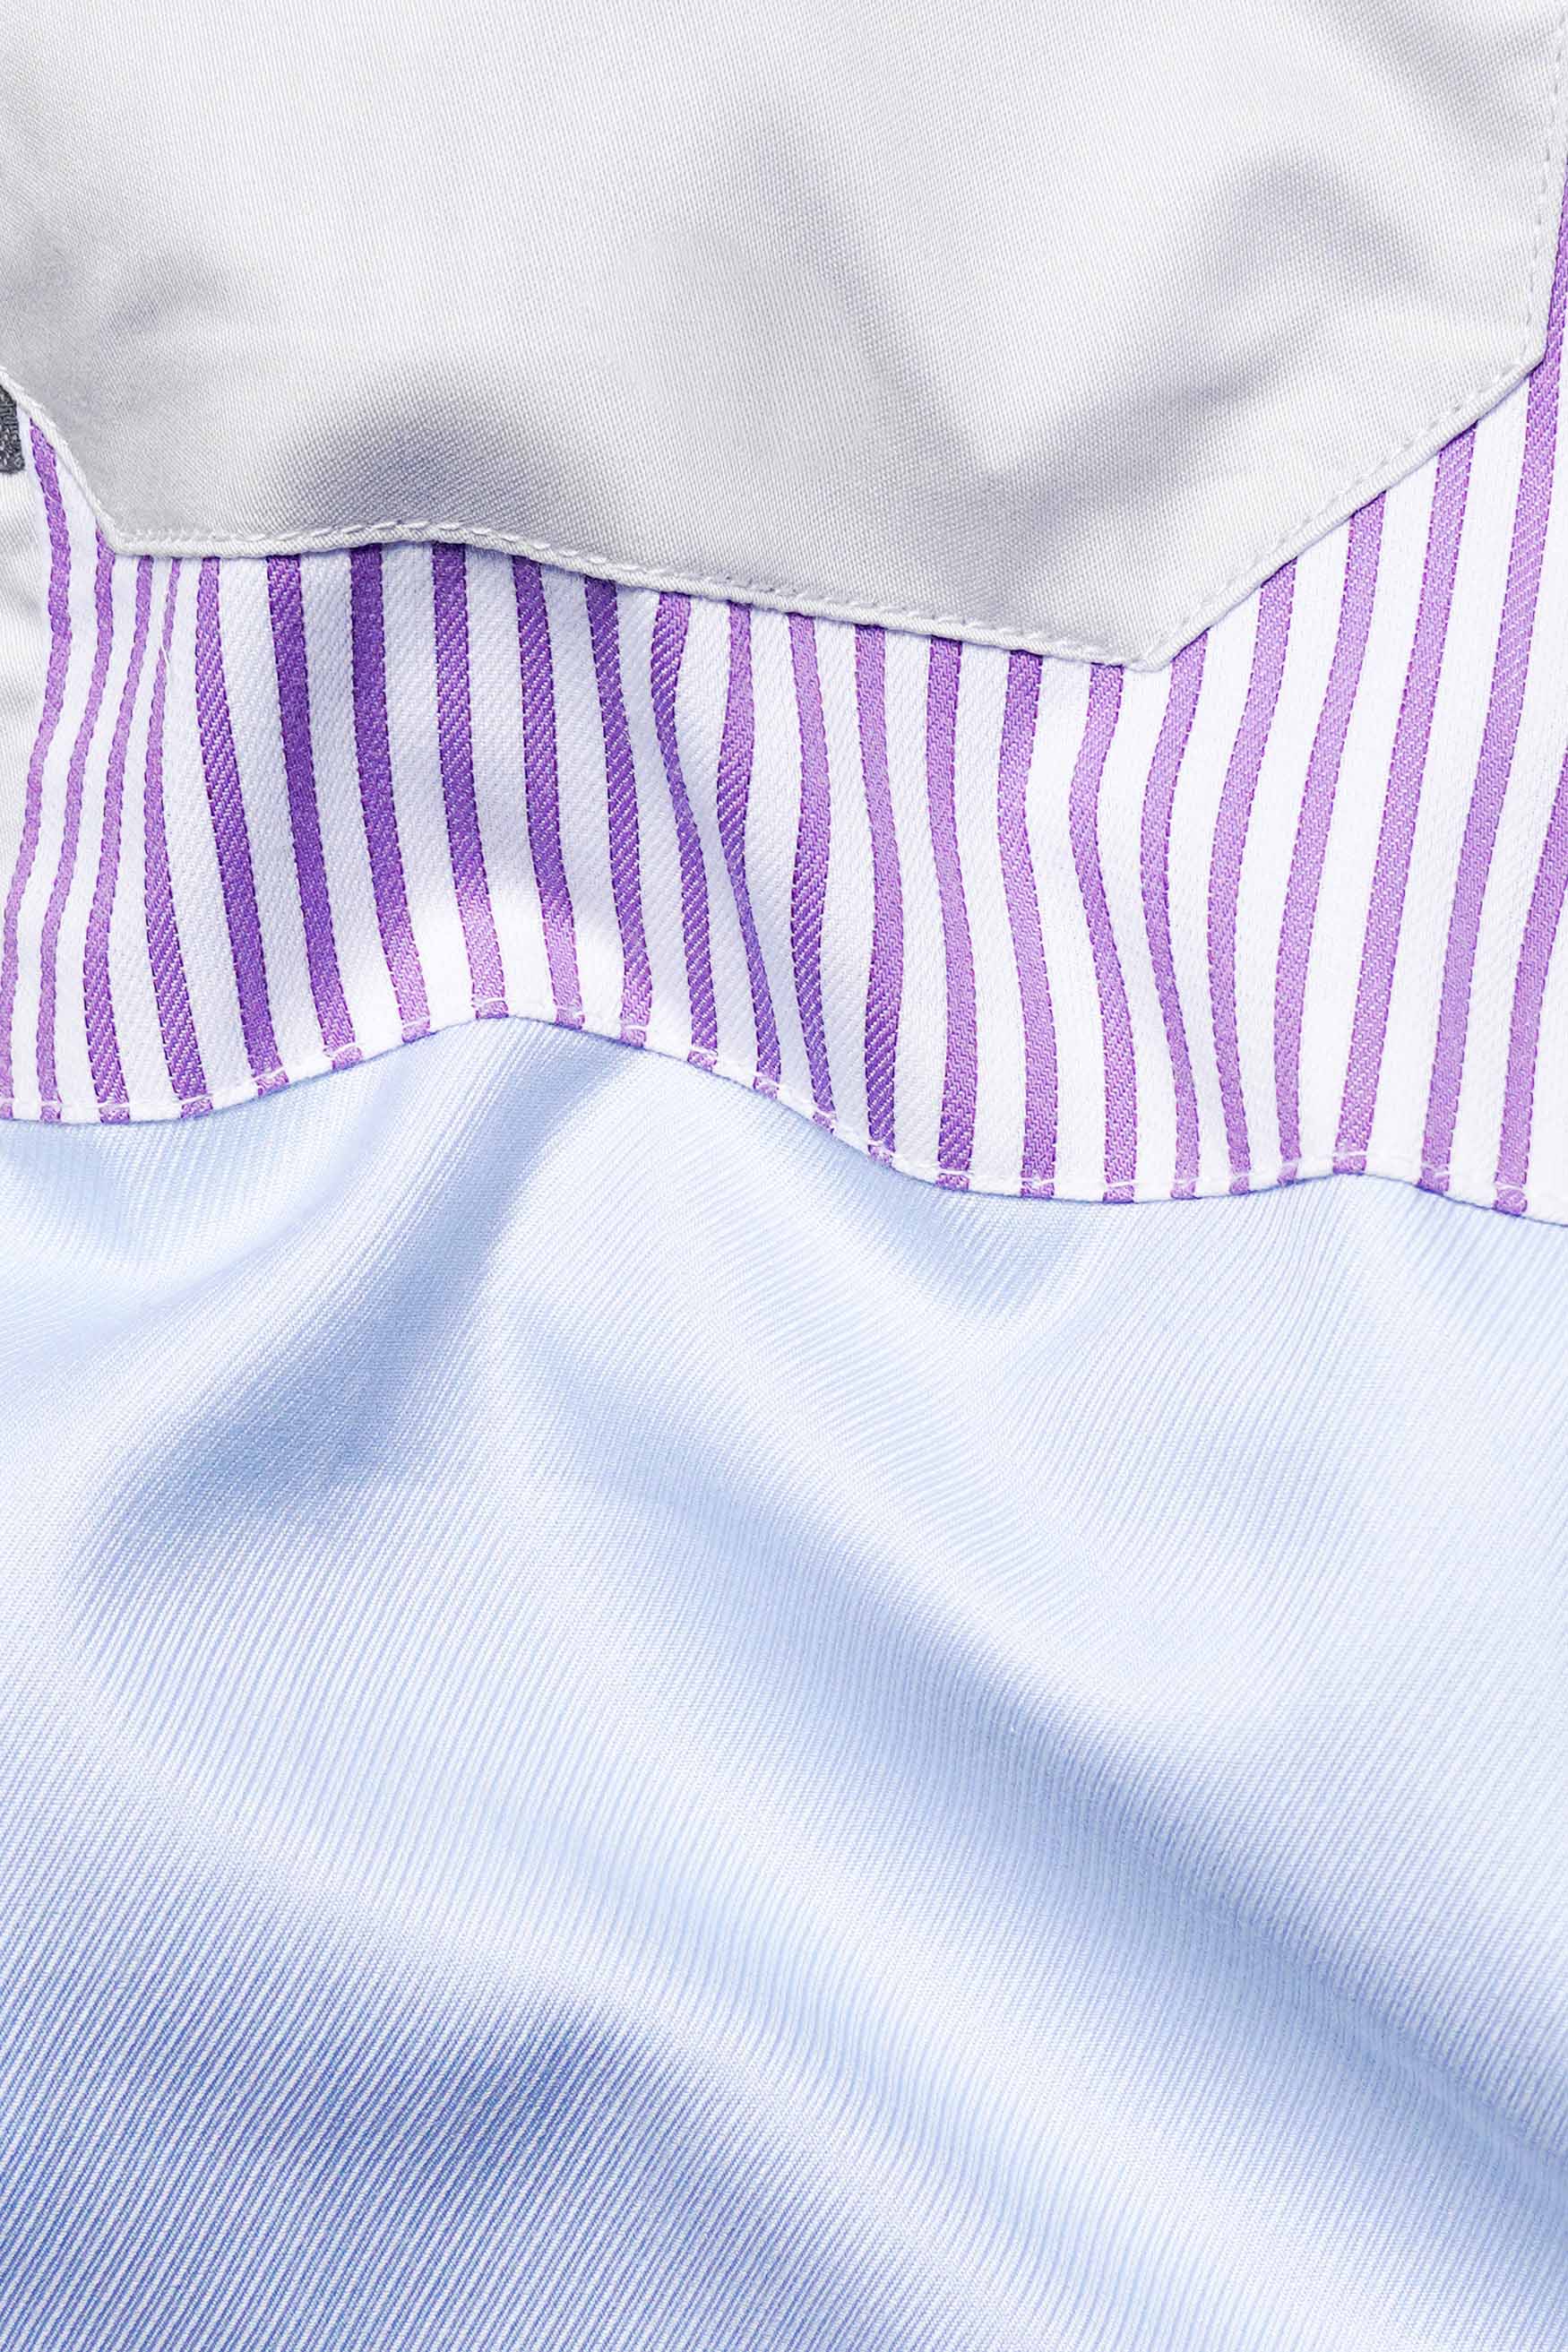 Gainsboro Gray with Marengo Gray and Jordy Blue Subtle Sheen Super Soft Premium Cotton Designer Shirt